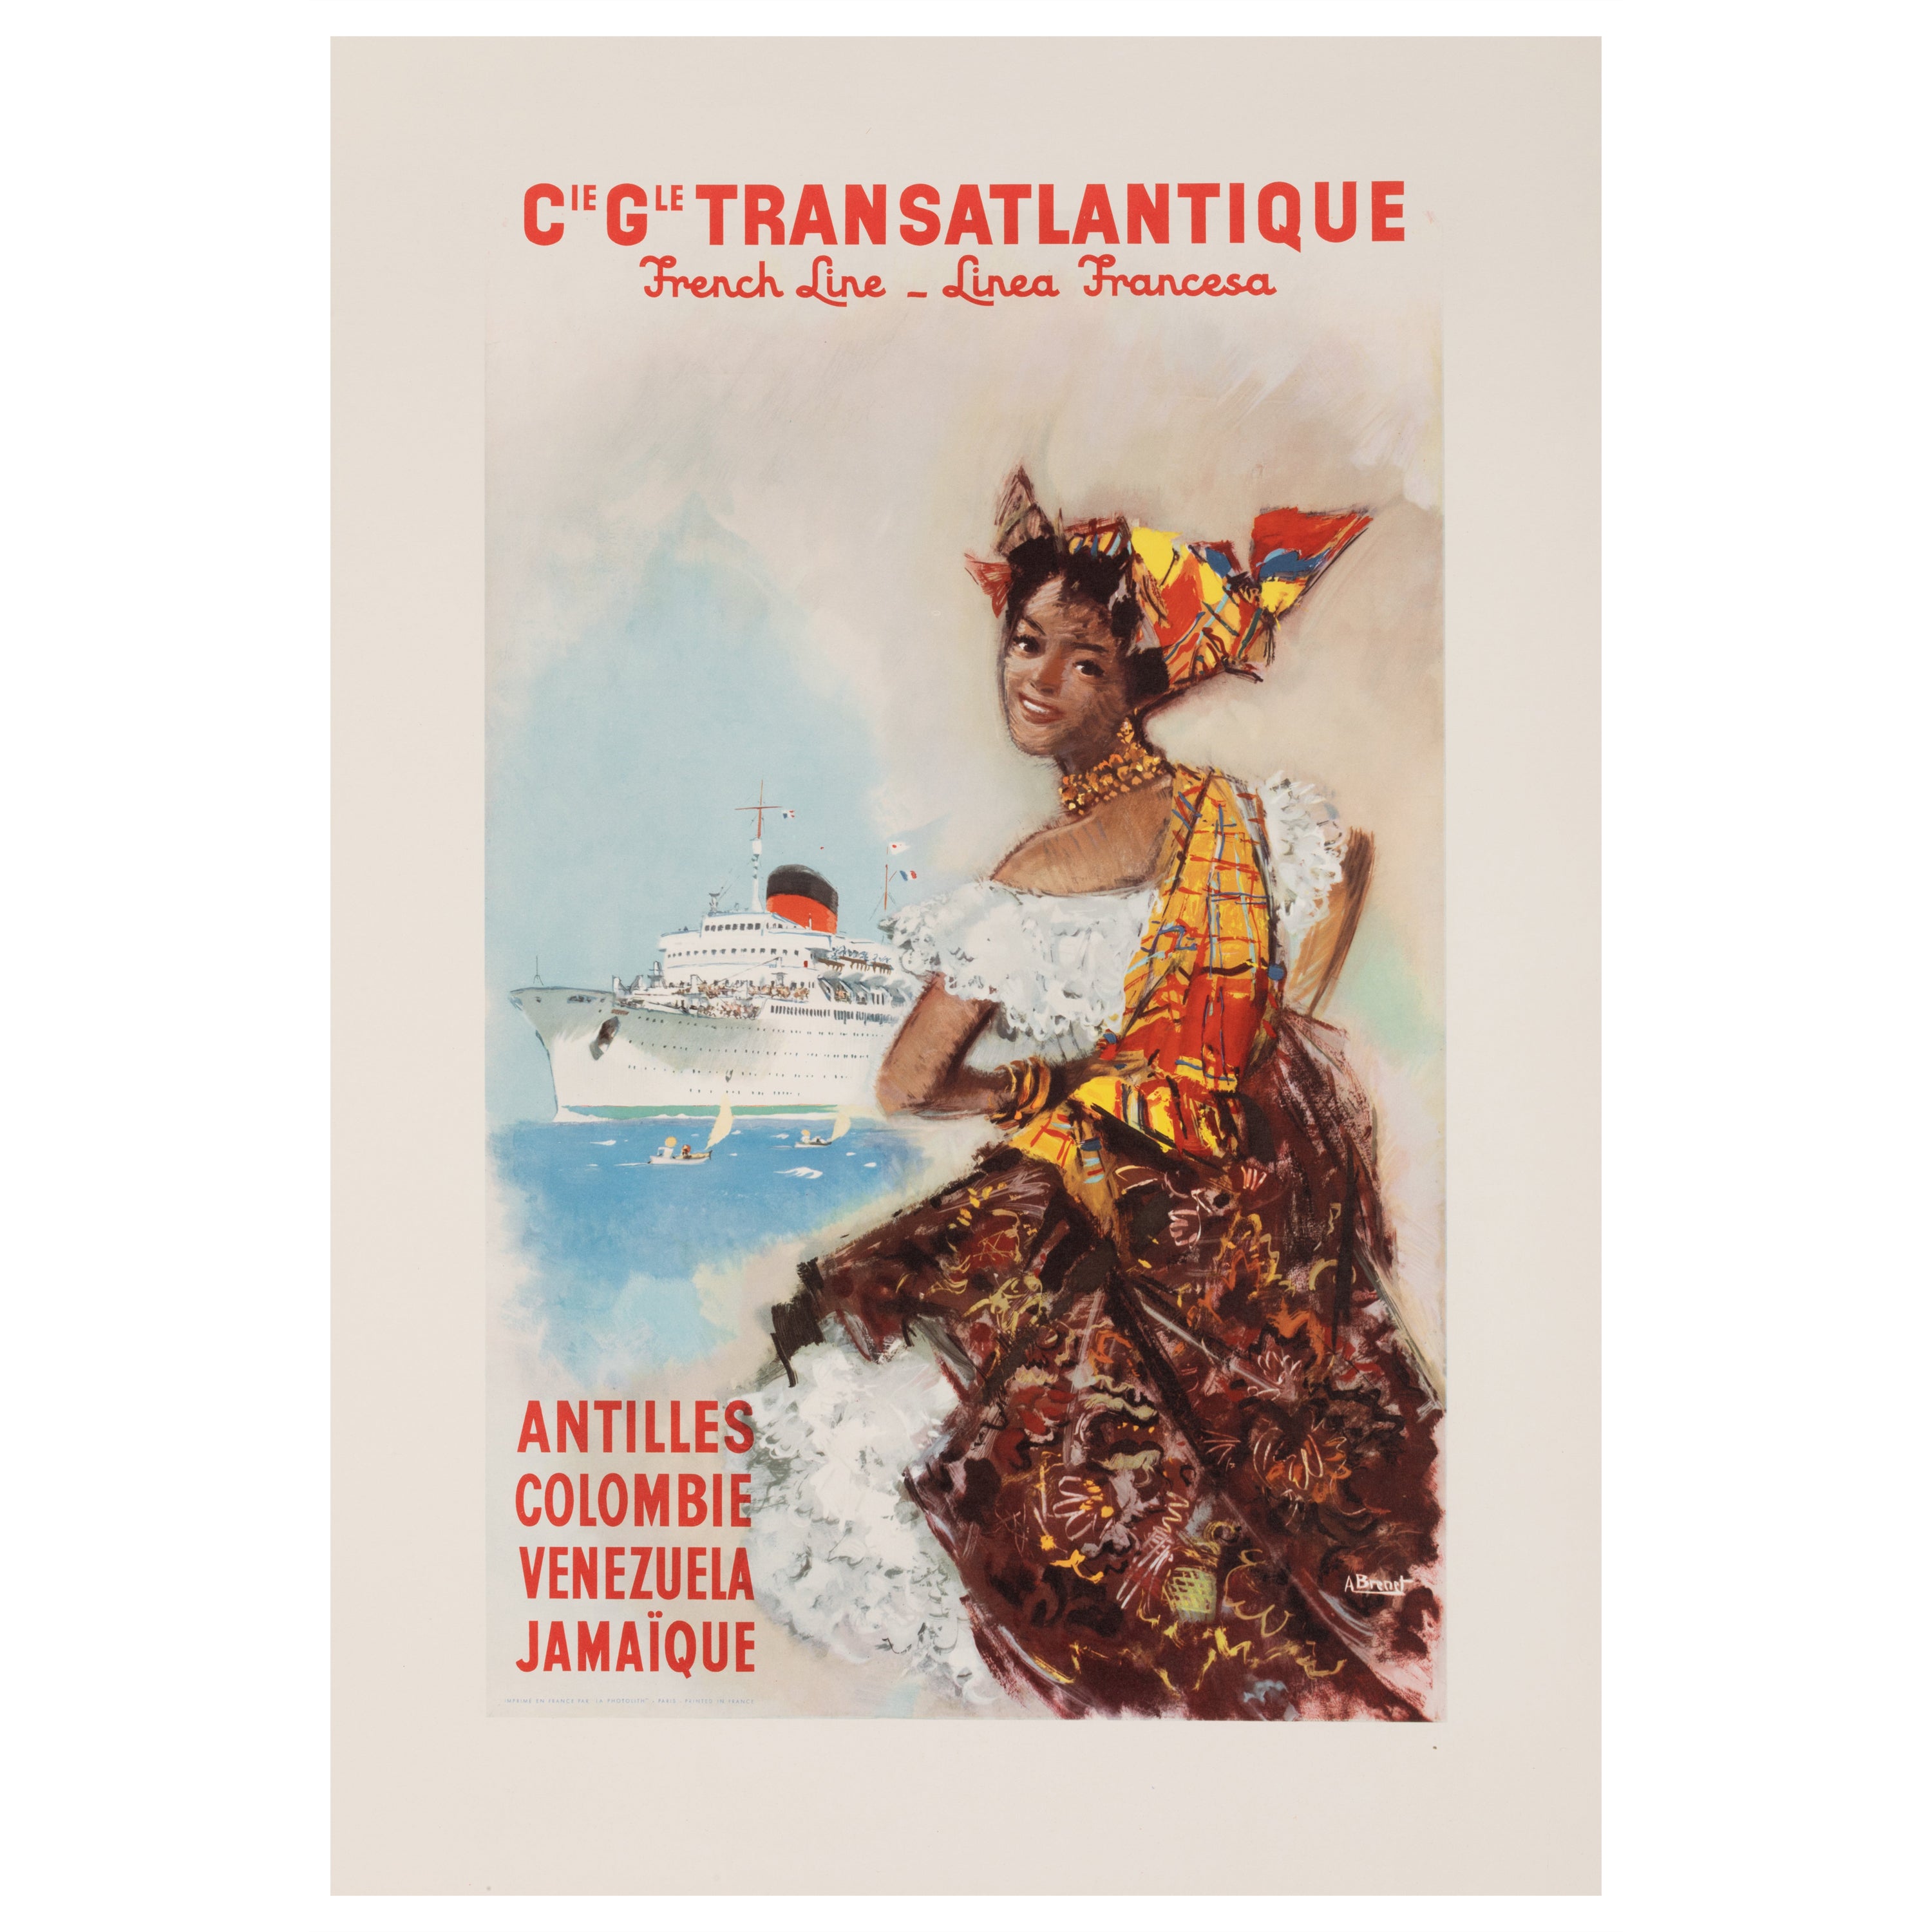 Brenet, Original Vintage Poster, CGT, Antilles, Jamaica Venezuela Colombia 1955  For Sale